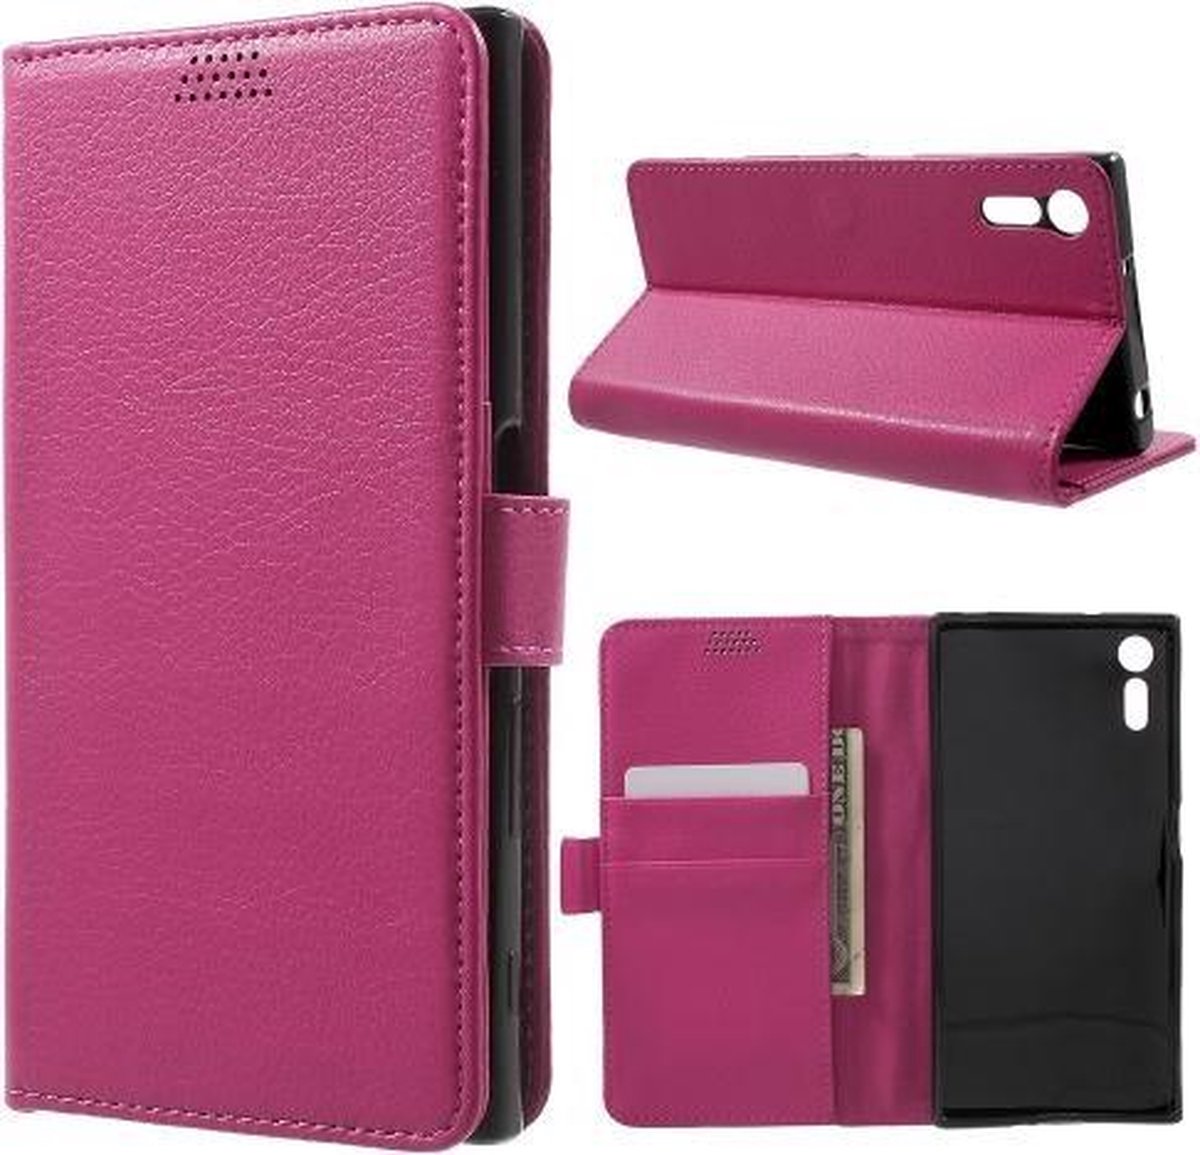 Litchi cover roze wallet case hoesje Sony Xperia XZ